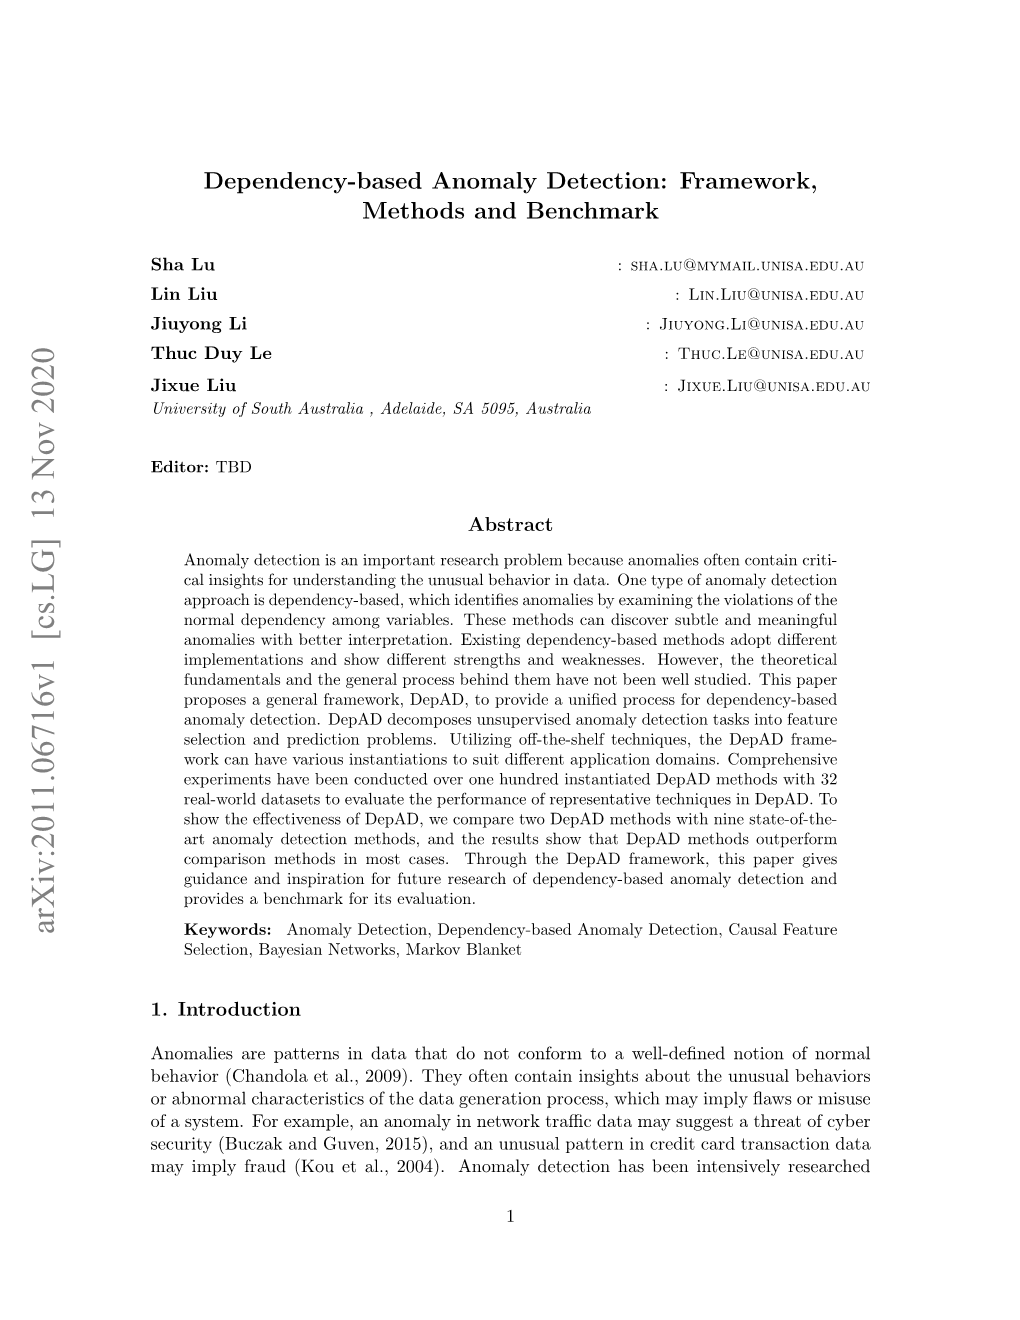 Dependency-Based Anomaly Detection: Framework, Methods and Benchmark